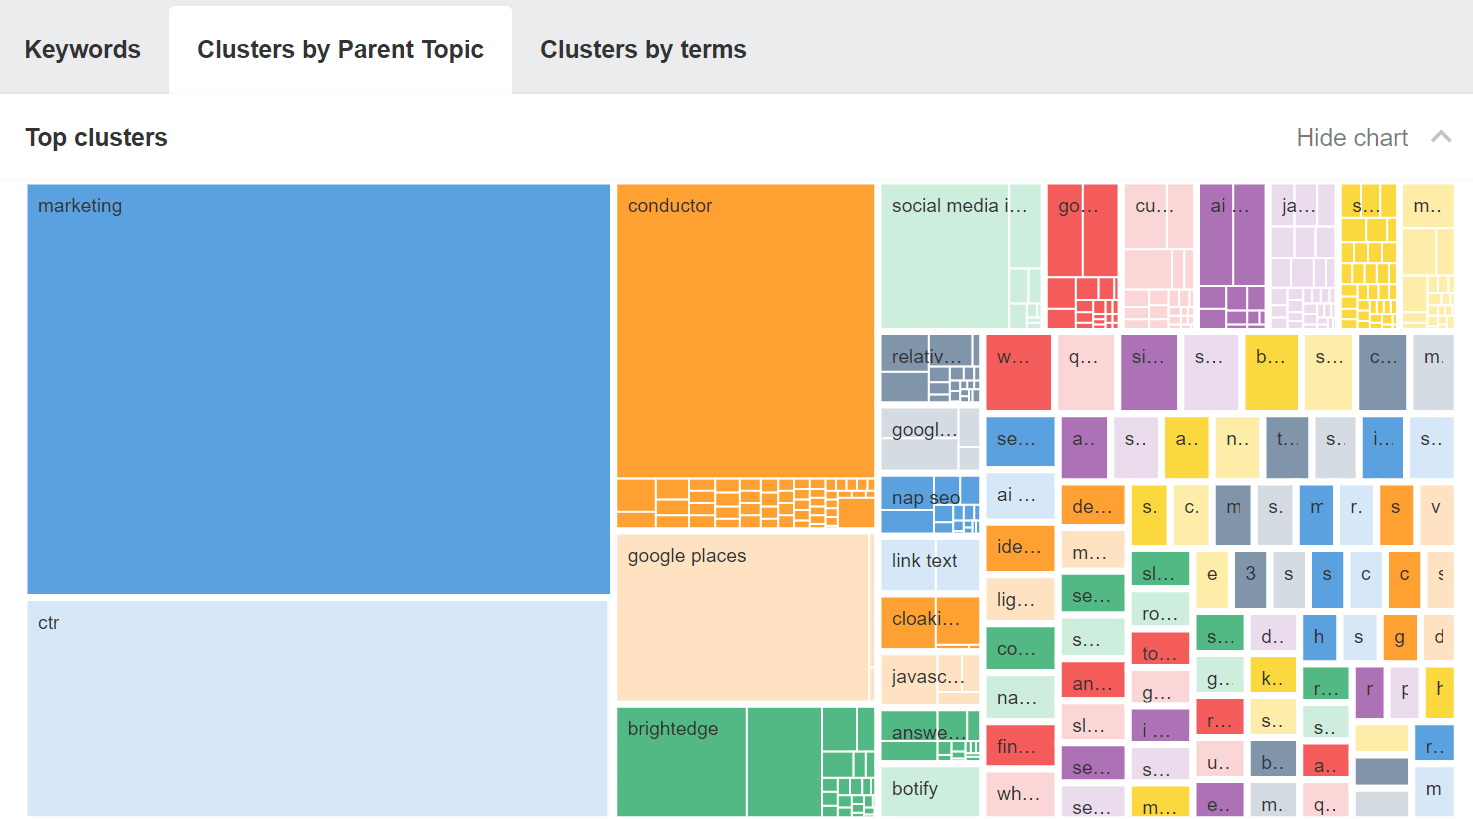 Clusters by Parent Topic via Ahrefs' Keywords Explorer